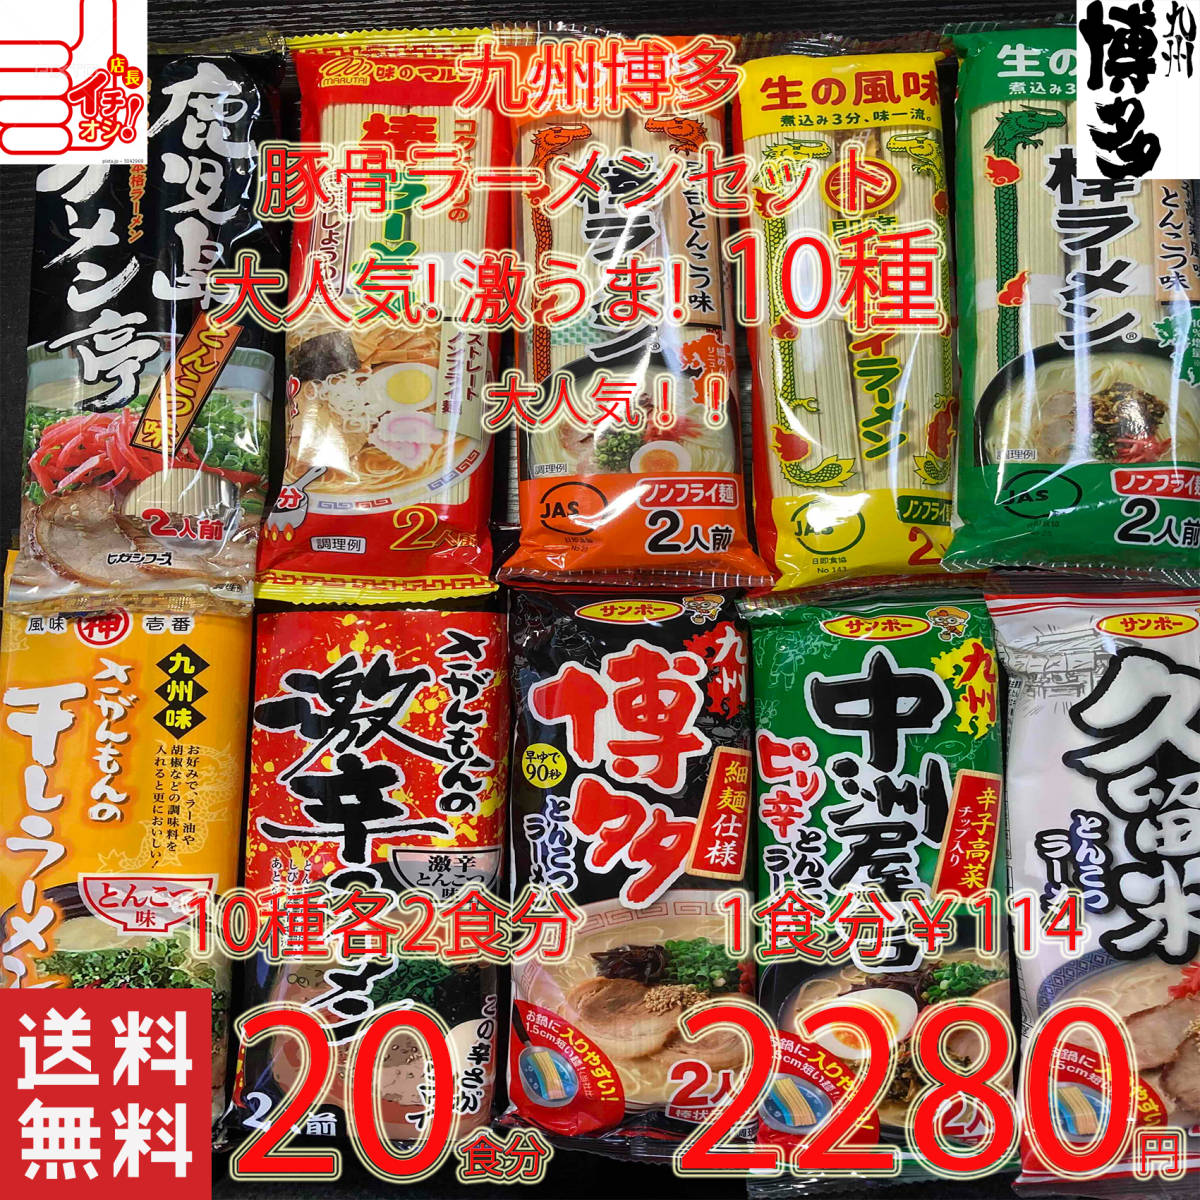  star great popularity Kyushu Hakata pig . ramen set 10 kind recommendation set nationwide free shipping Kyushu Hakata 3920